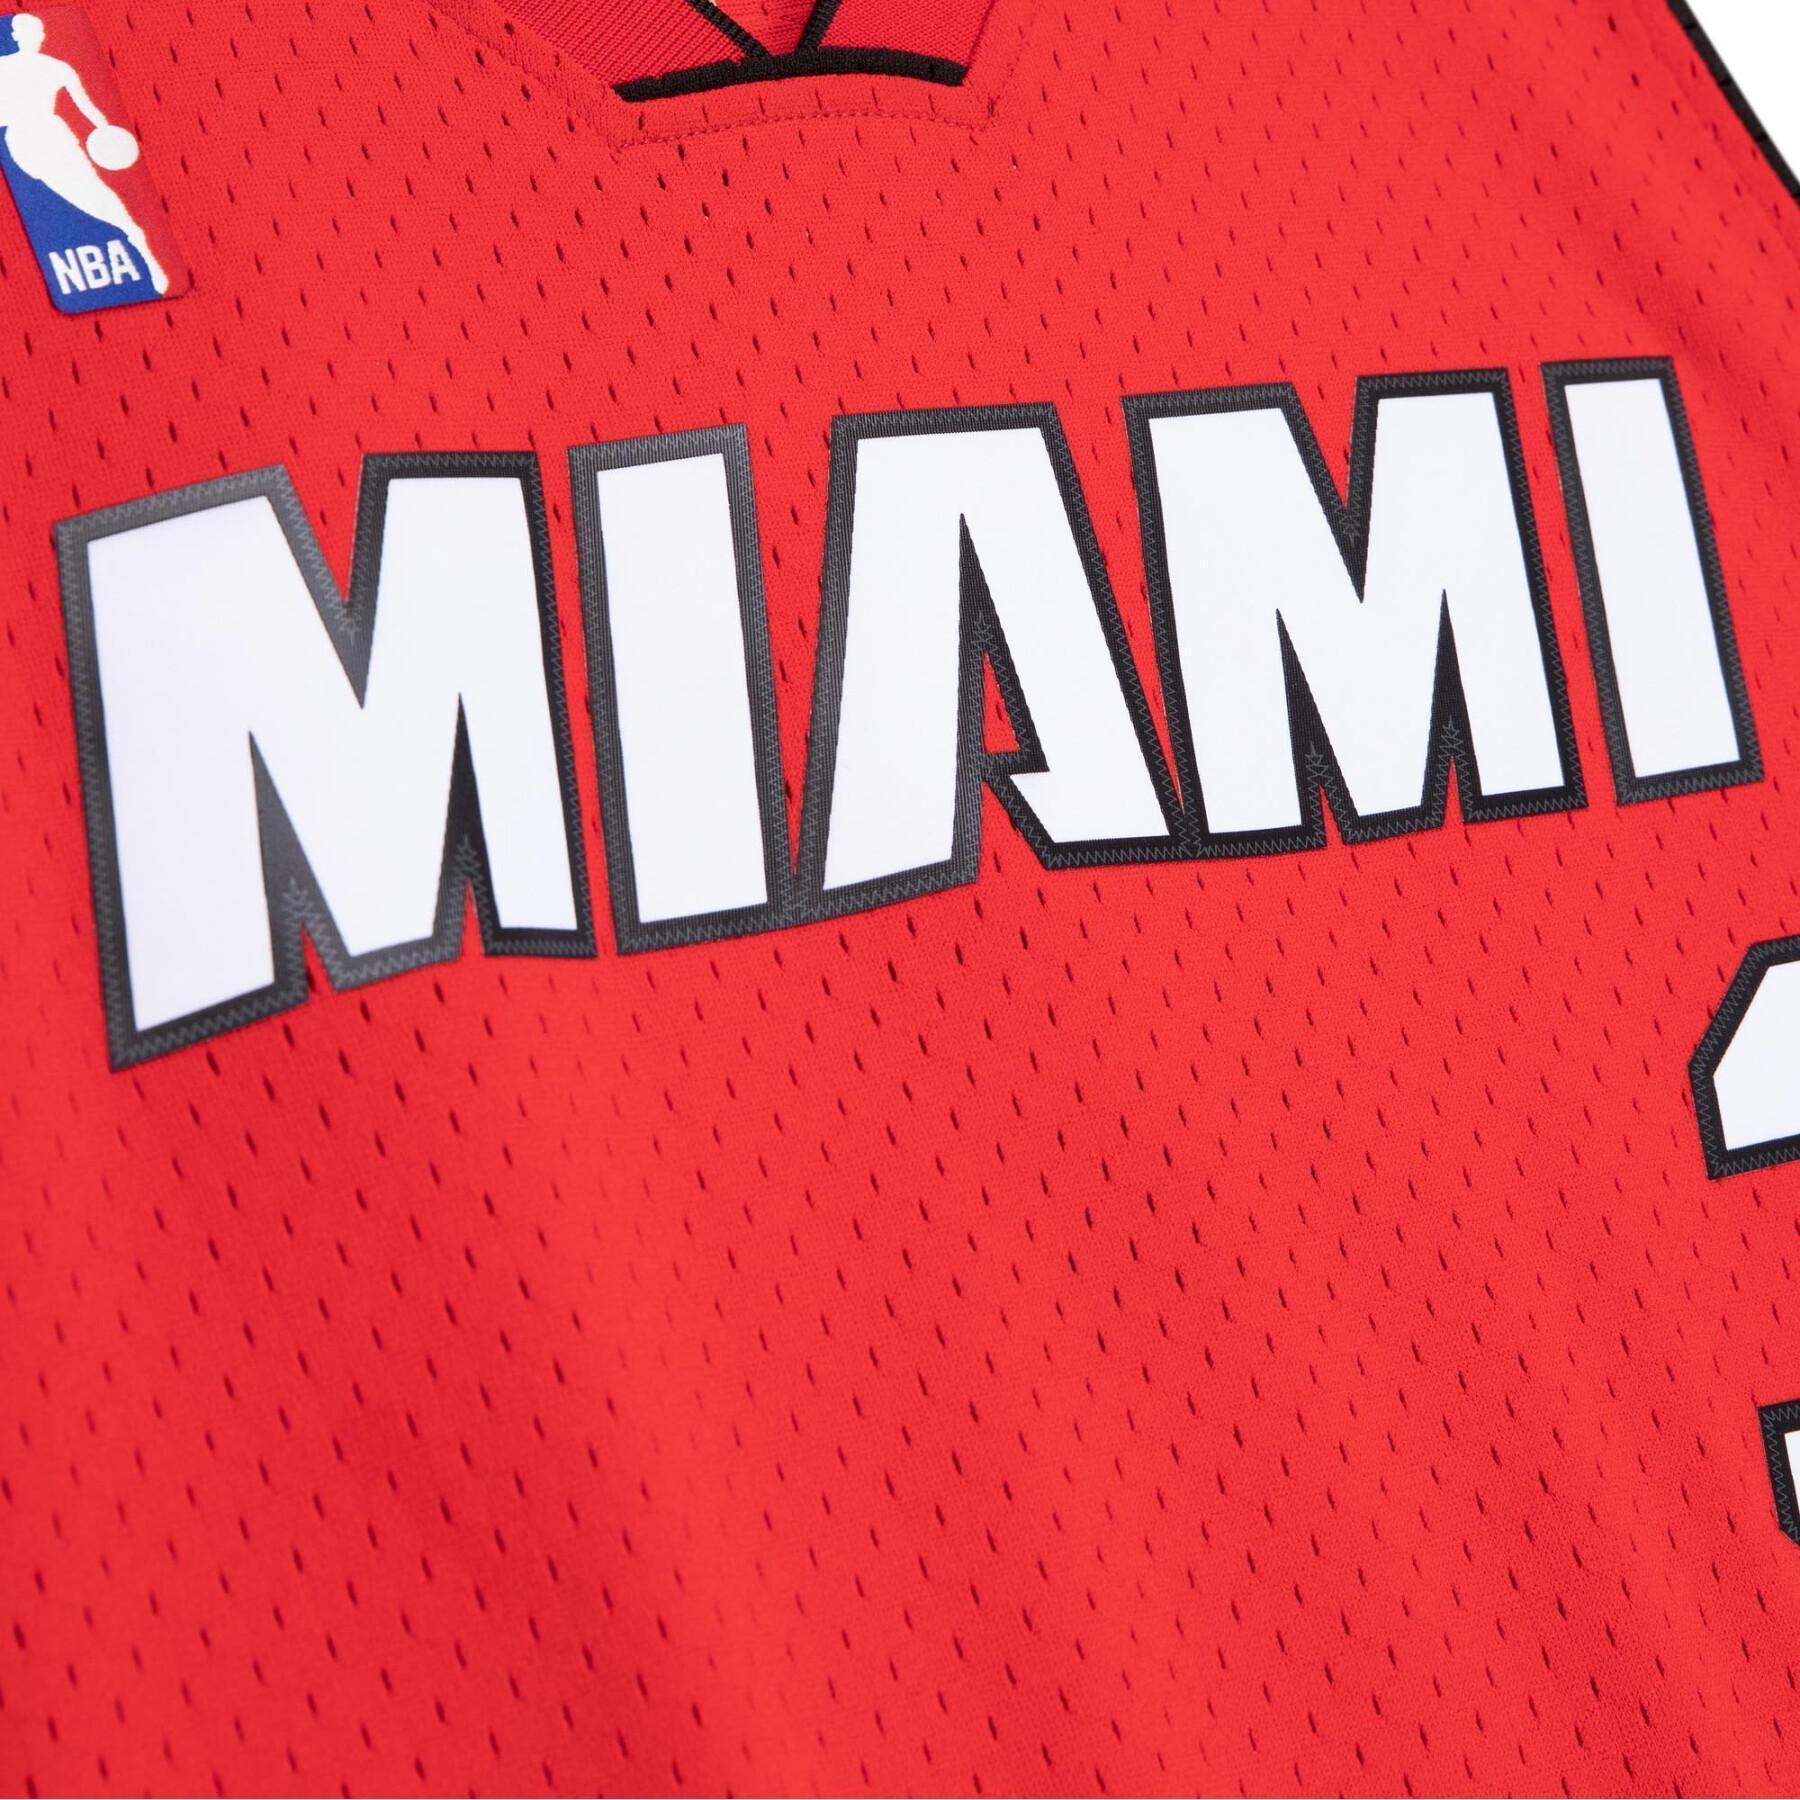 Alternatives Trikot Miami Heat